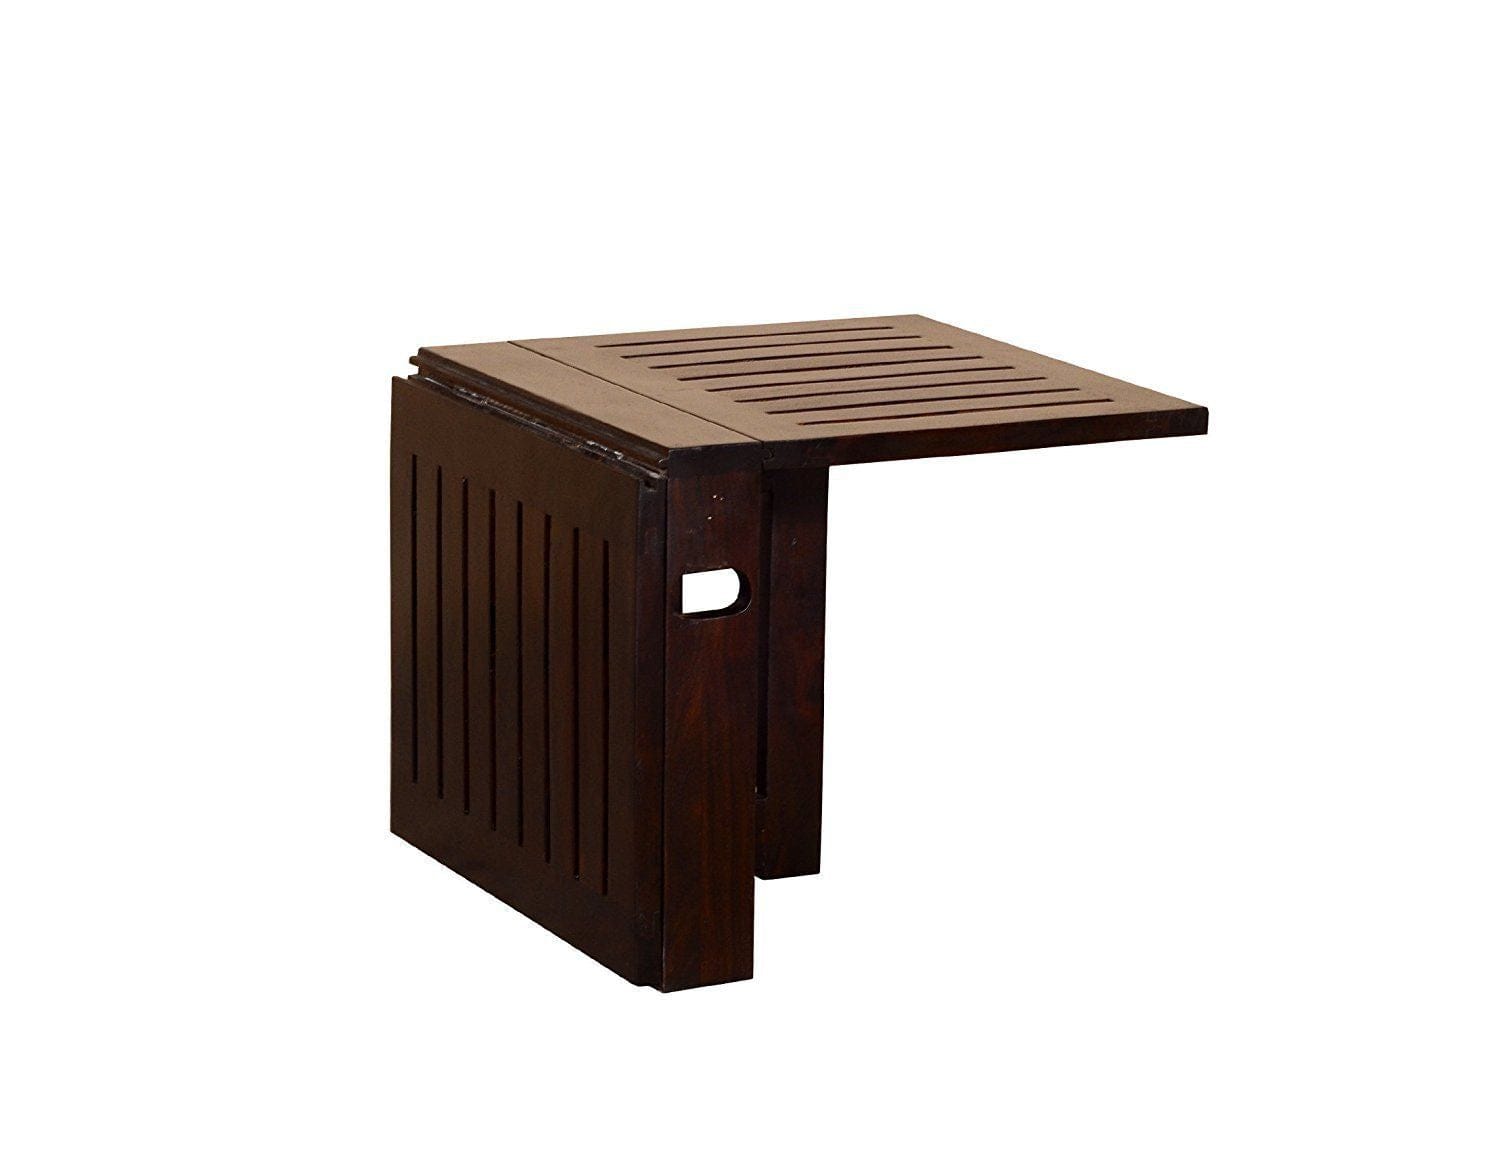 Sheesham Wood Foldable Coffee table In Walnut Finish